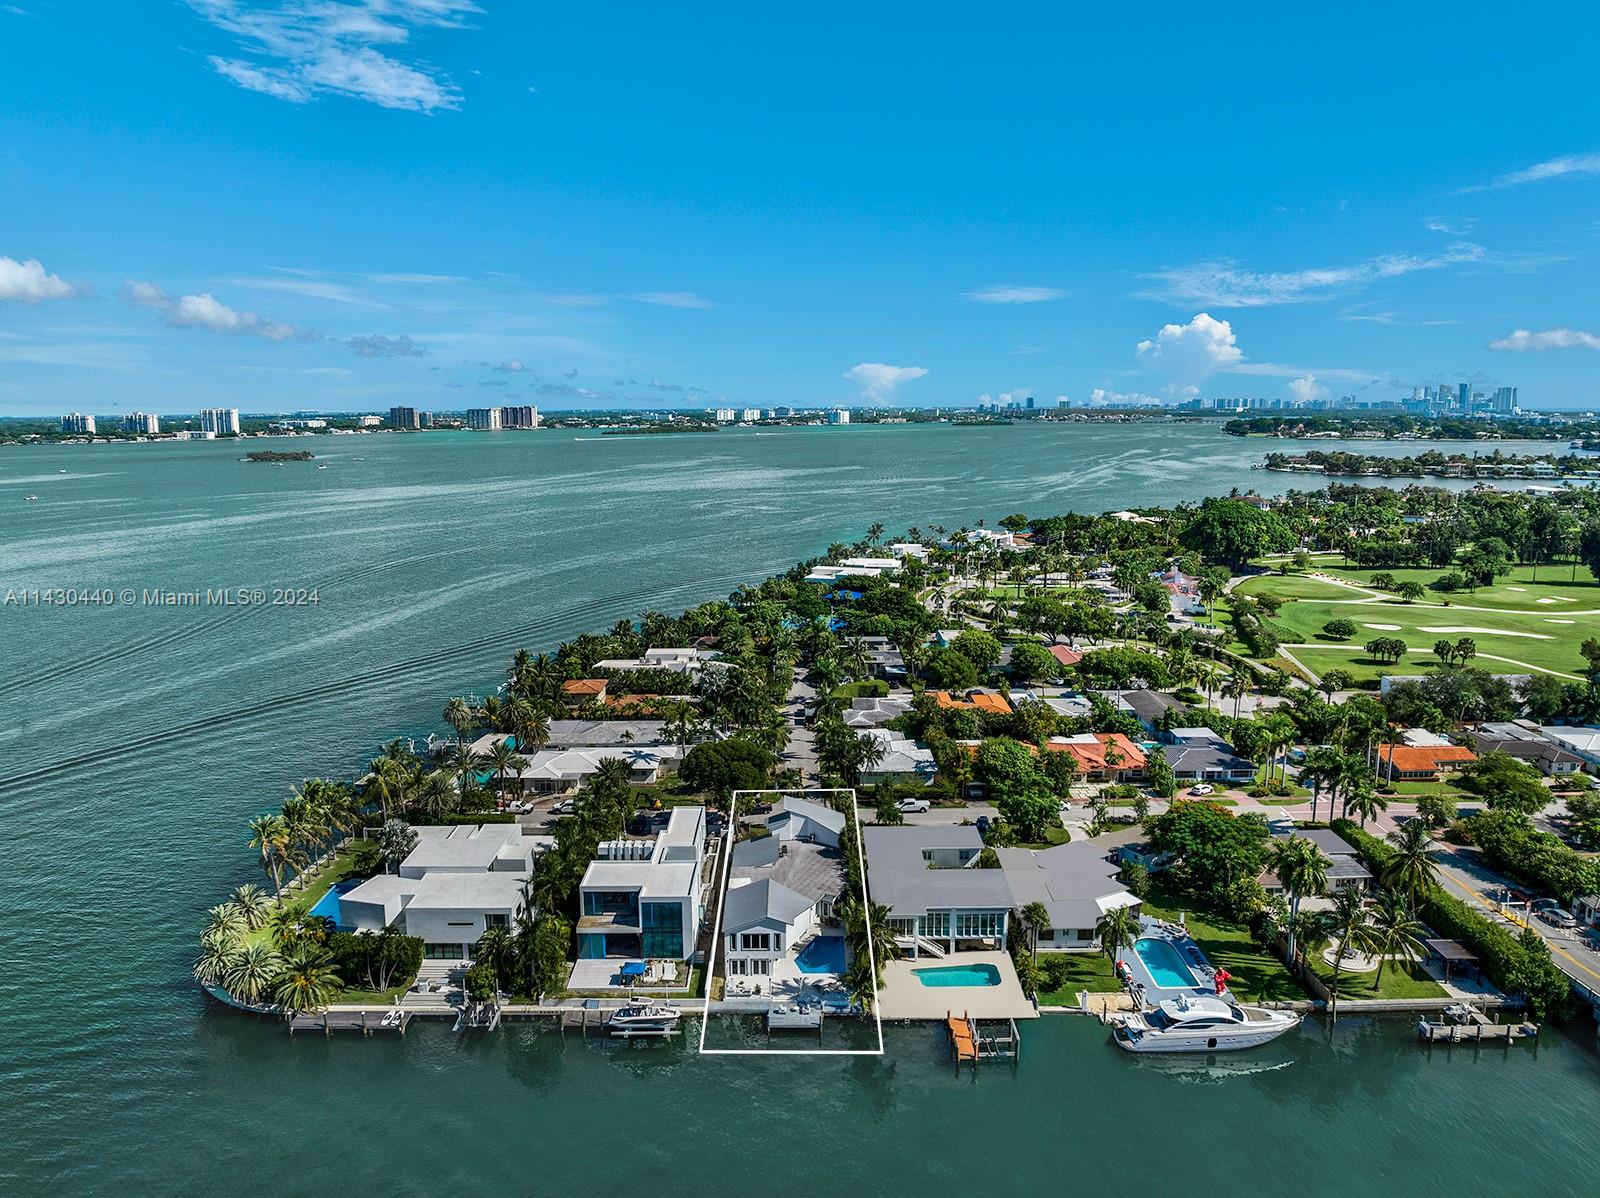 Property for Sale at 1040 S Shore Dr, Miami Beach, Miami-Dade County, Florida - Bedrooms: 6 
Bathrooms: 6  - $4,900,000